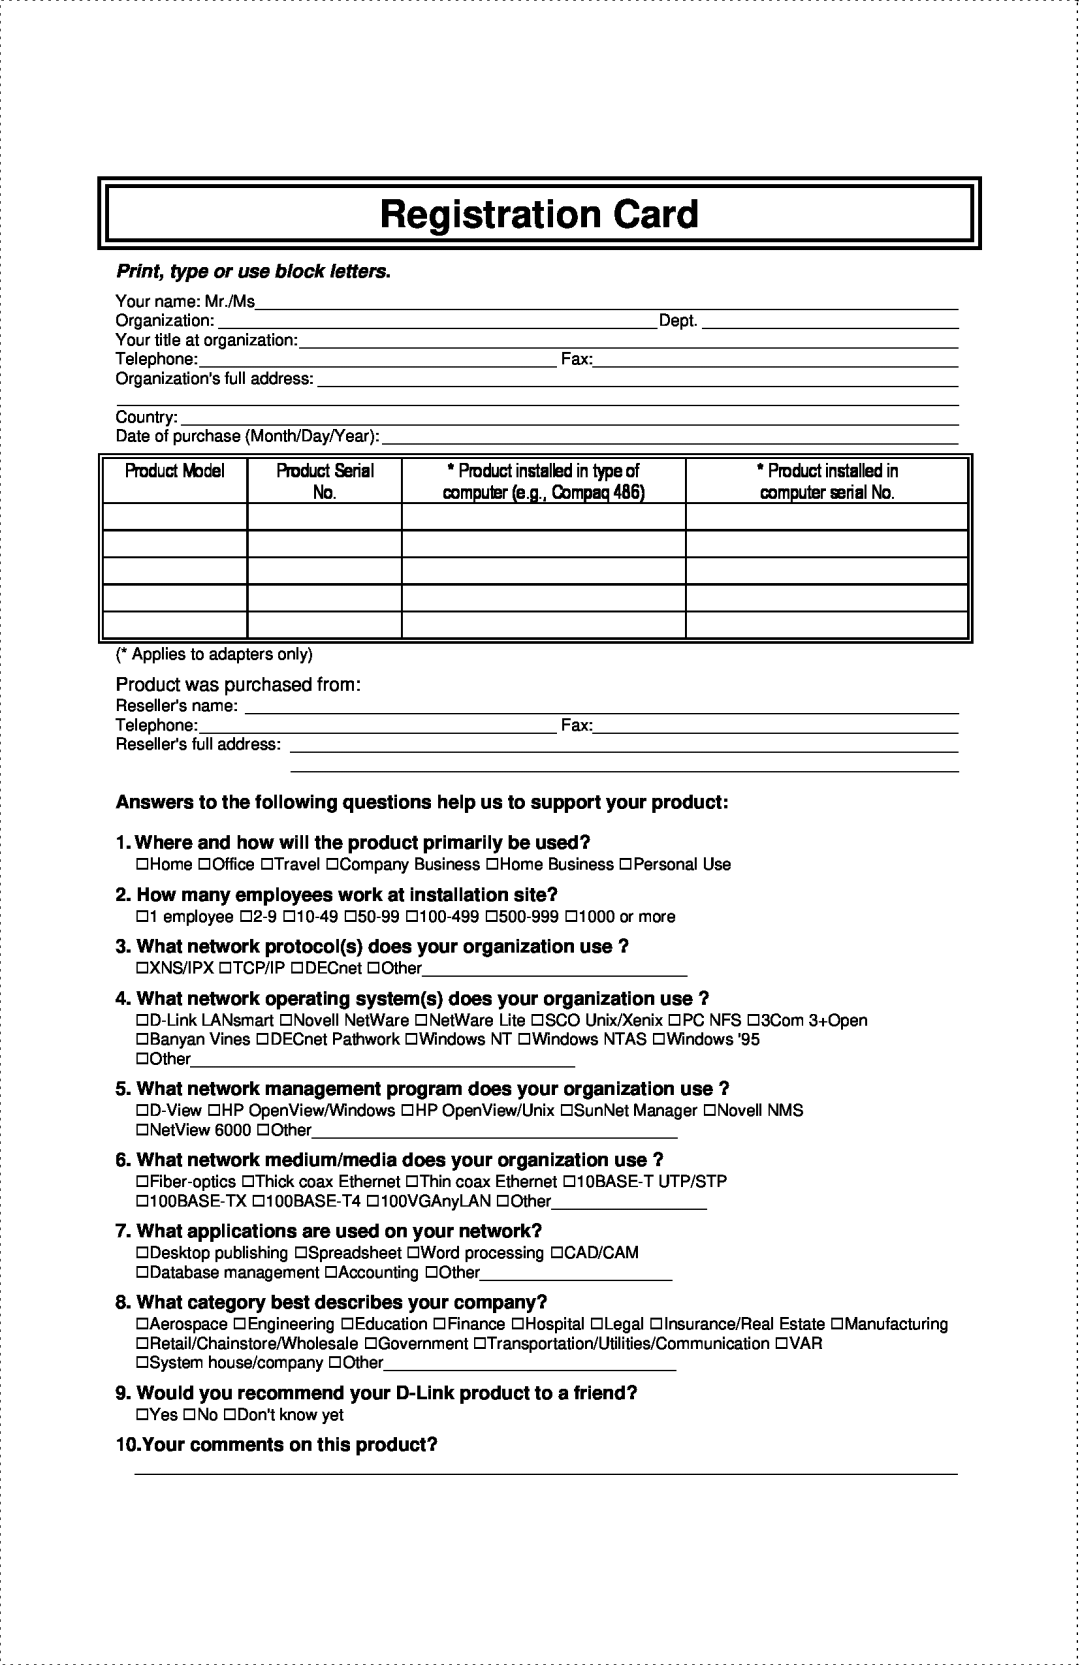 D-Link DES-802 manual Registration Card, Print, type or use block letters 